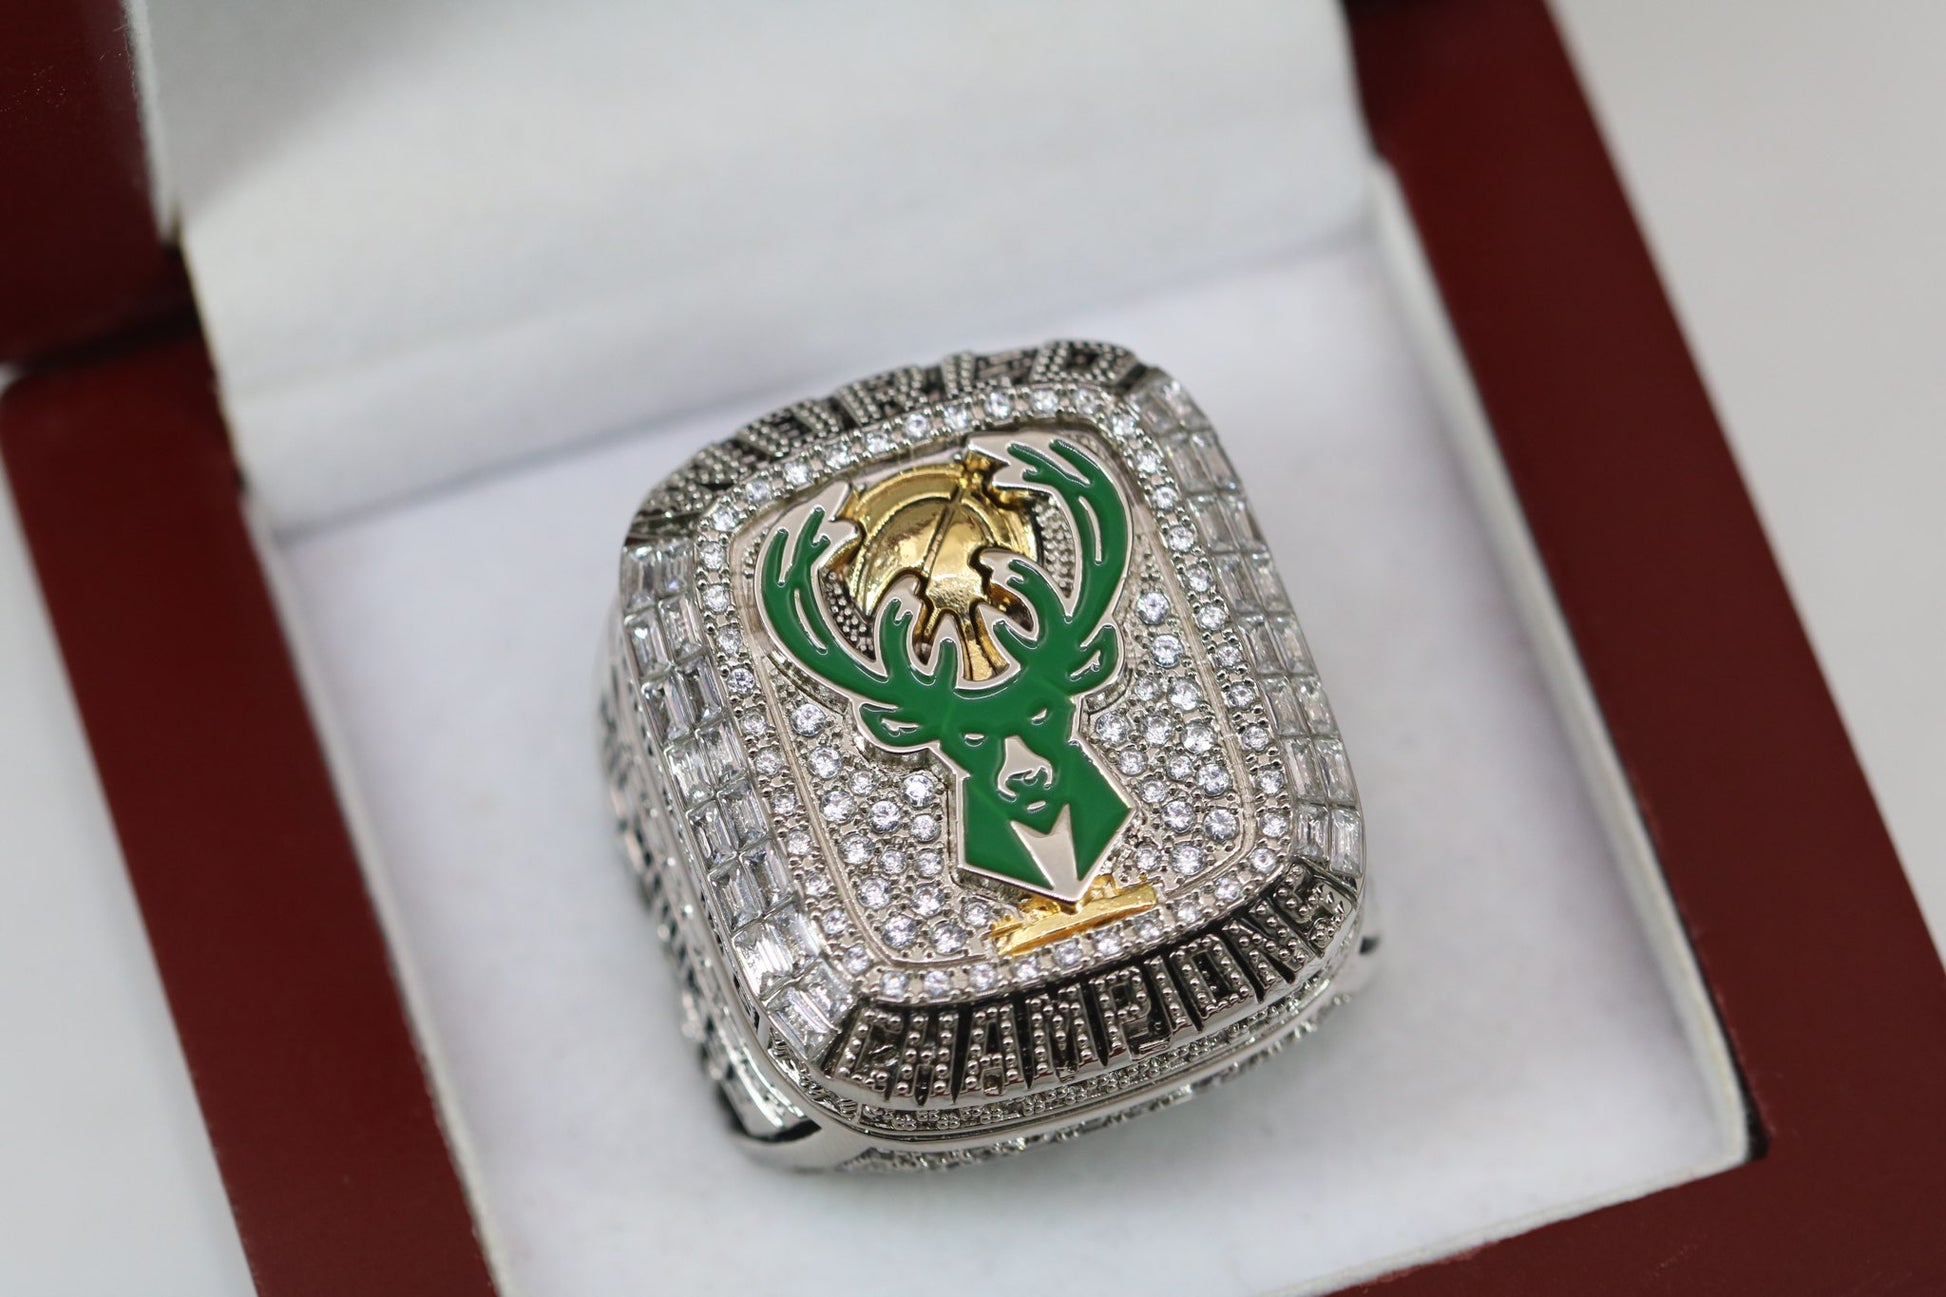 Bucks replica Championship rings; 1st 10K fans receive at Thursday game